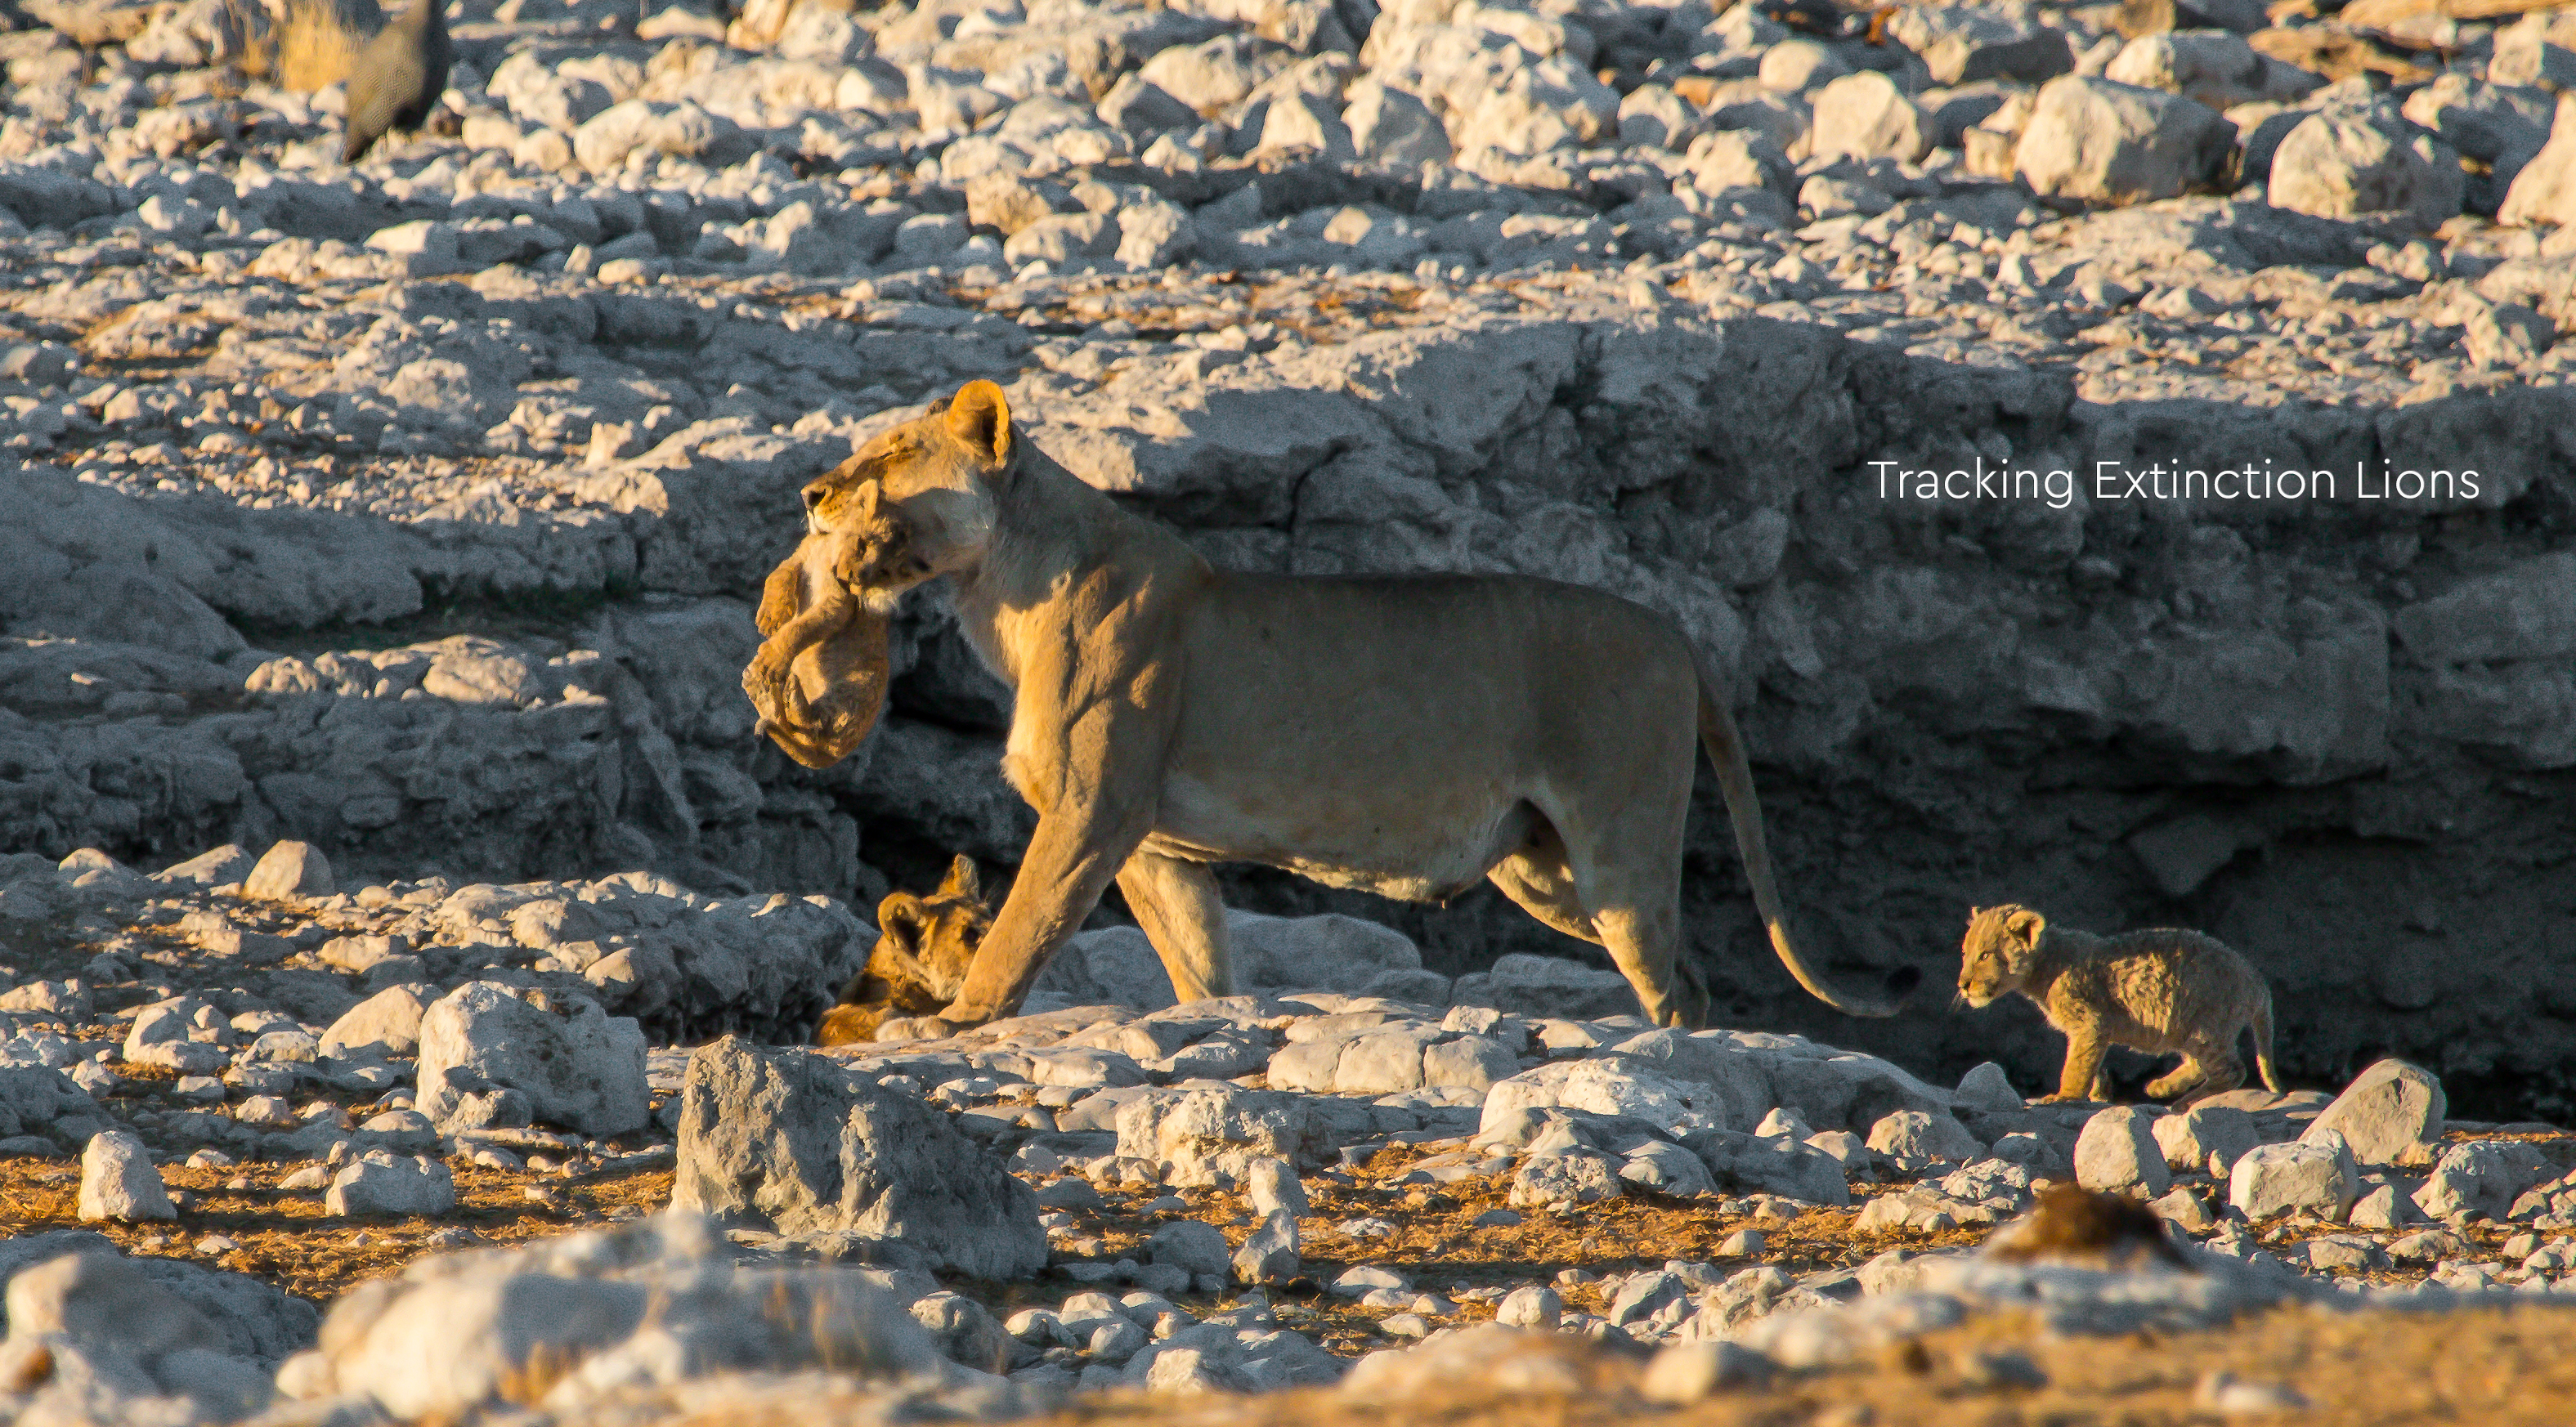 Tracking Extinction Lions - Kgalagadi wilderness 